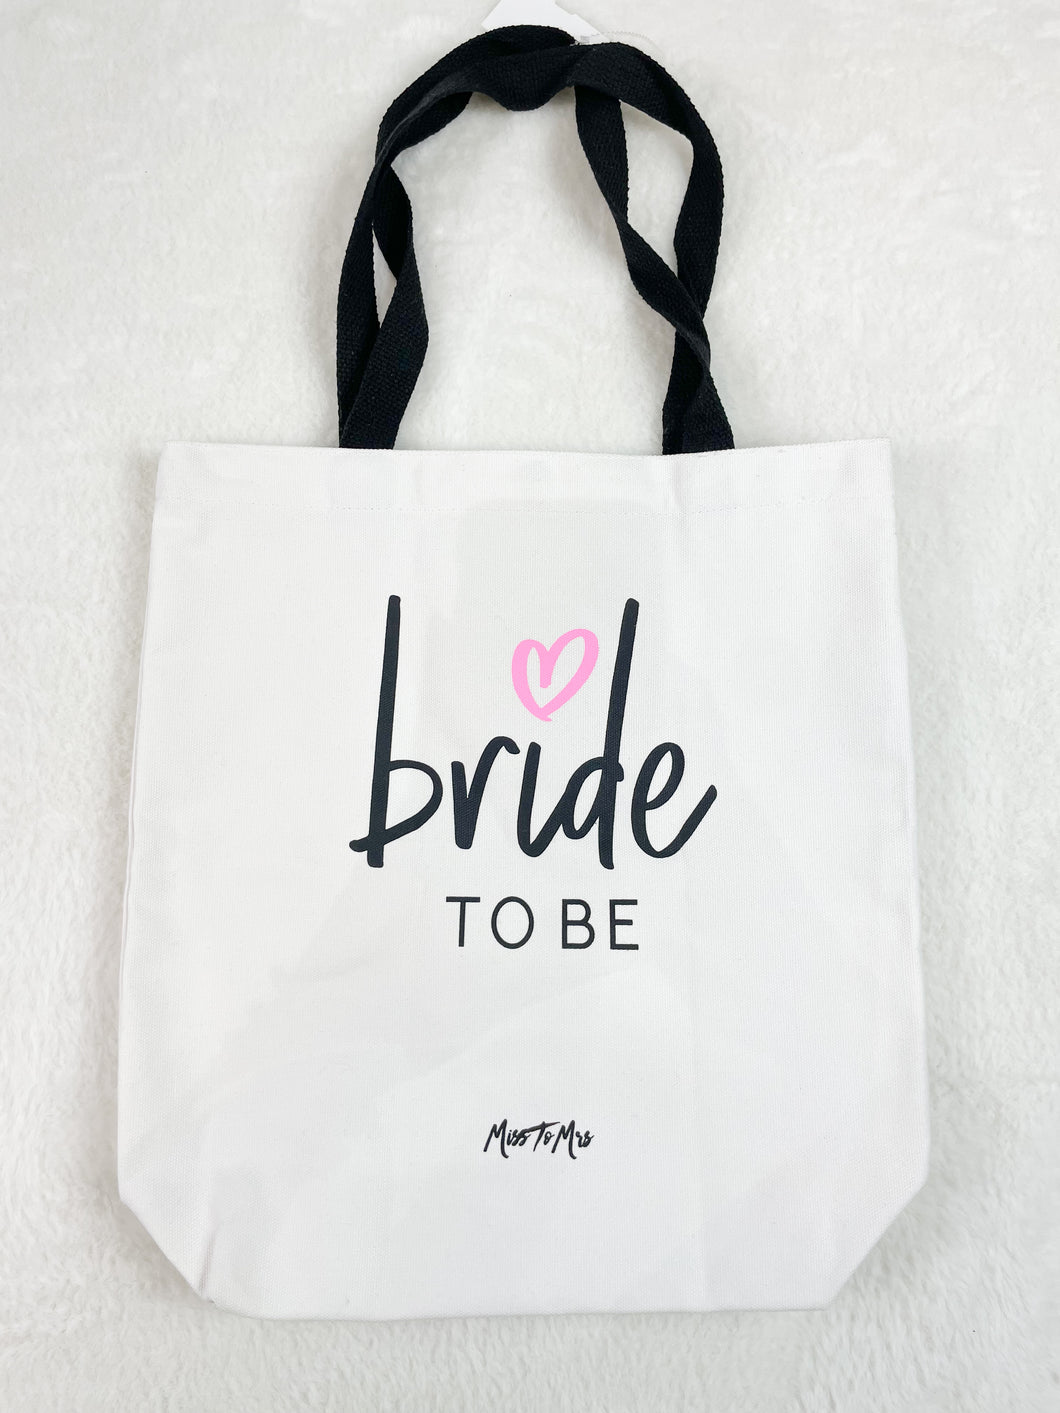 Bride to Be Tote Bag * - Plato's Closet Parkersburg, WV